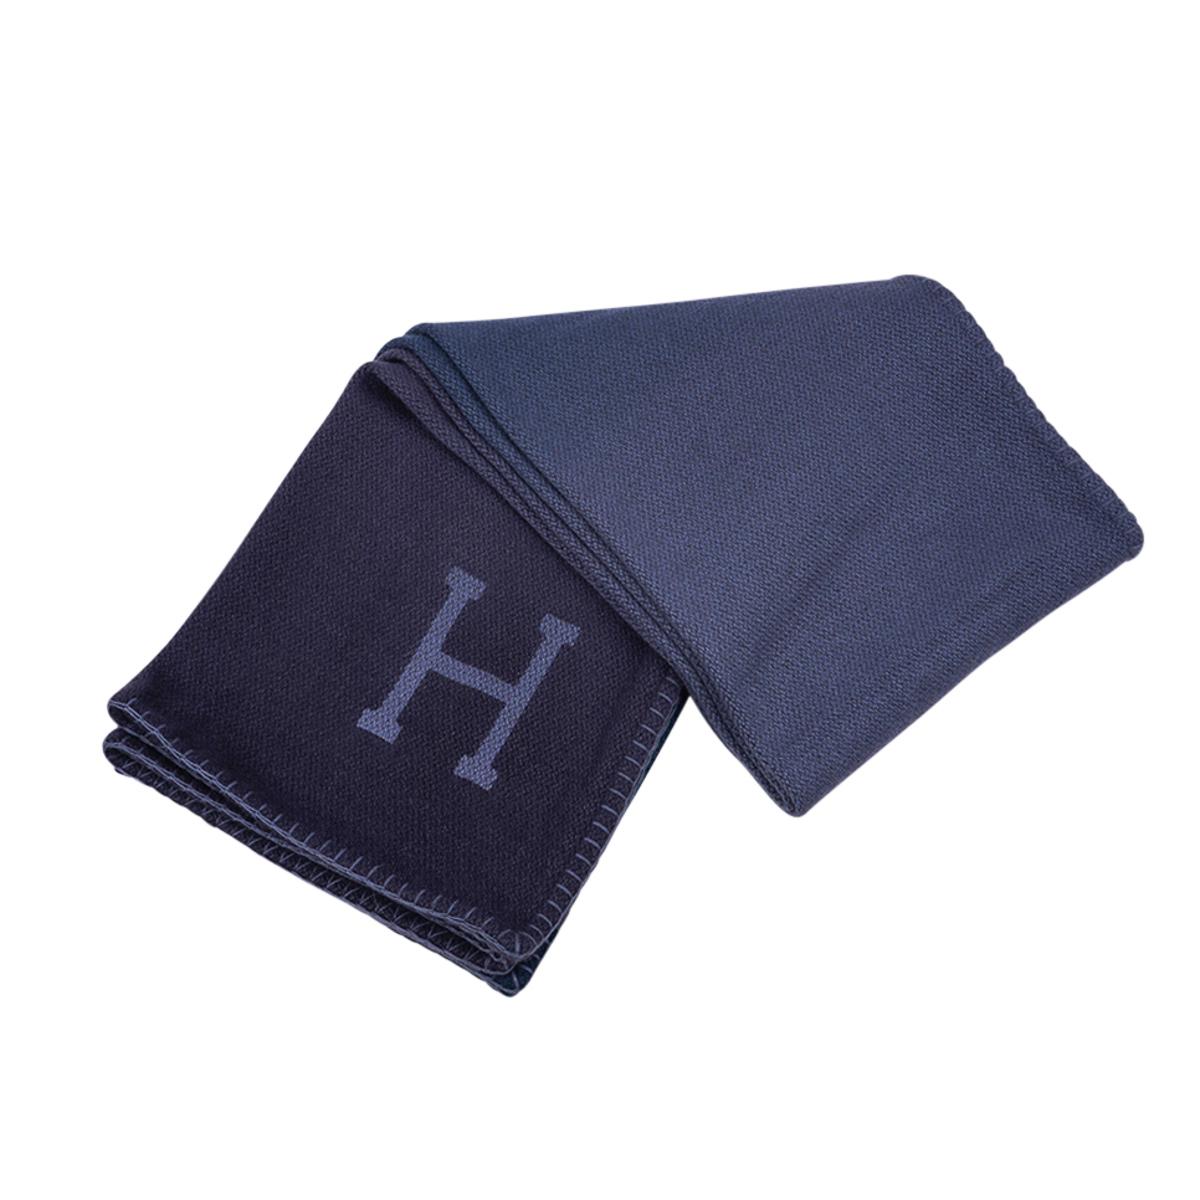 Hermes Yack 'n' Dye Ombre Blanket Anthracite 4